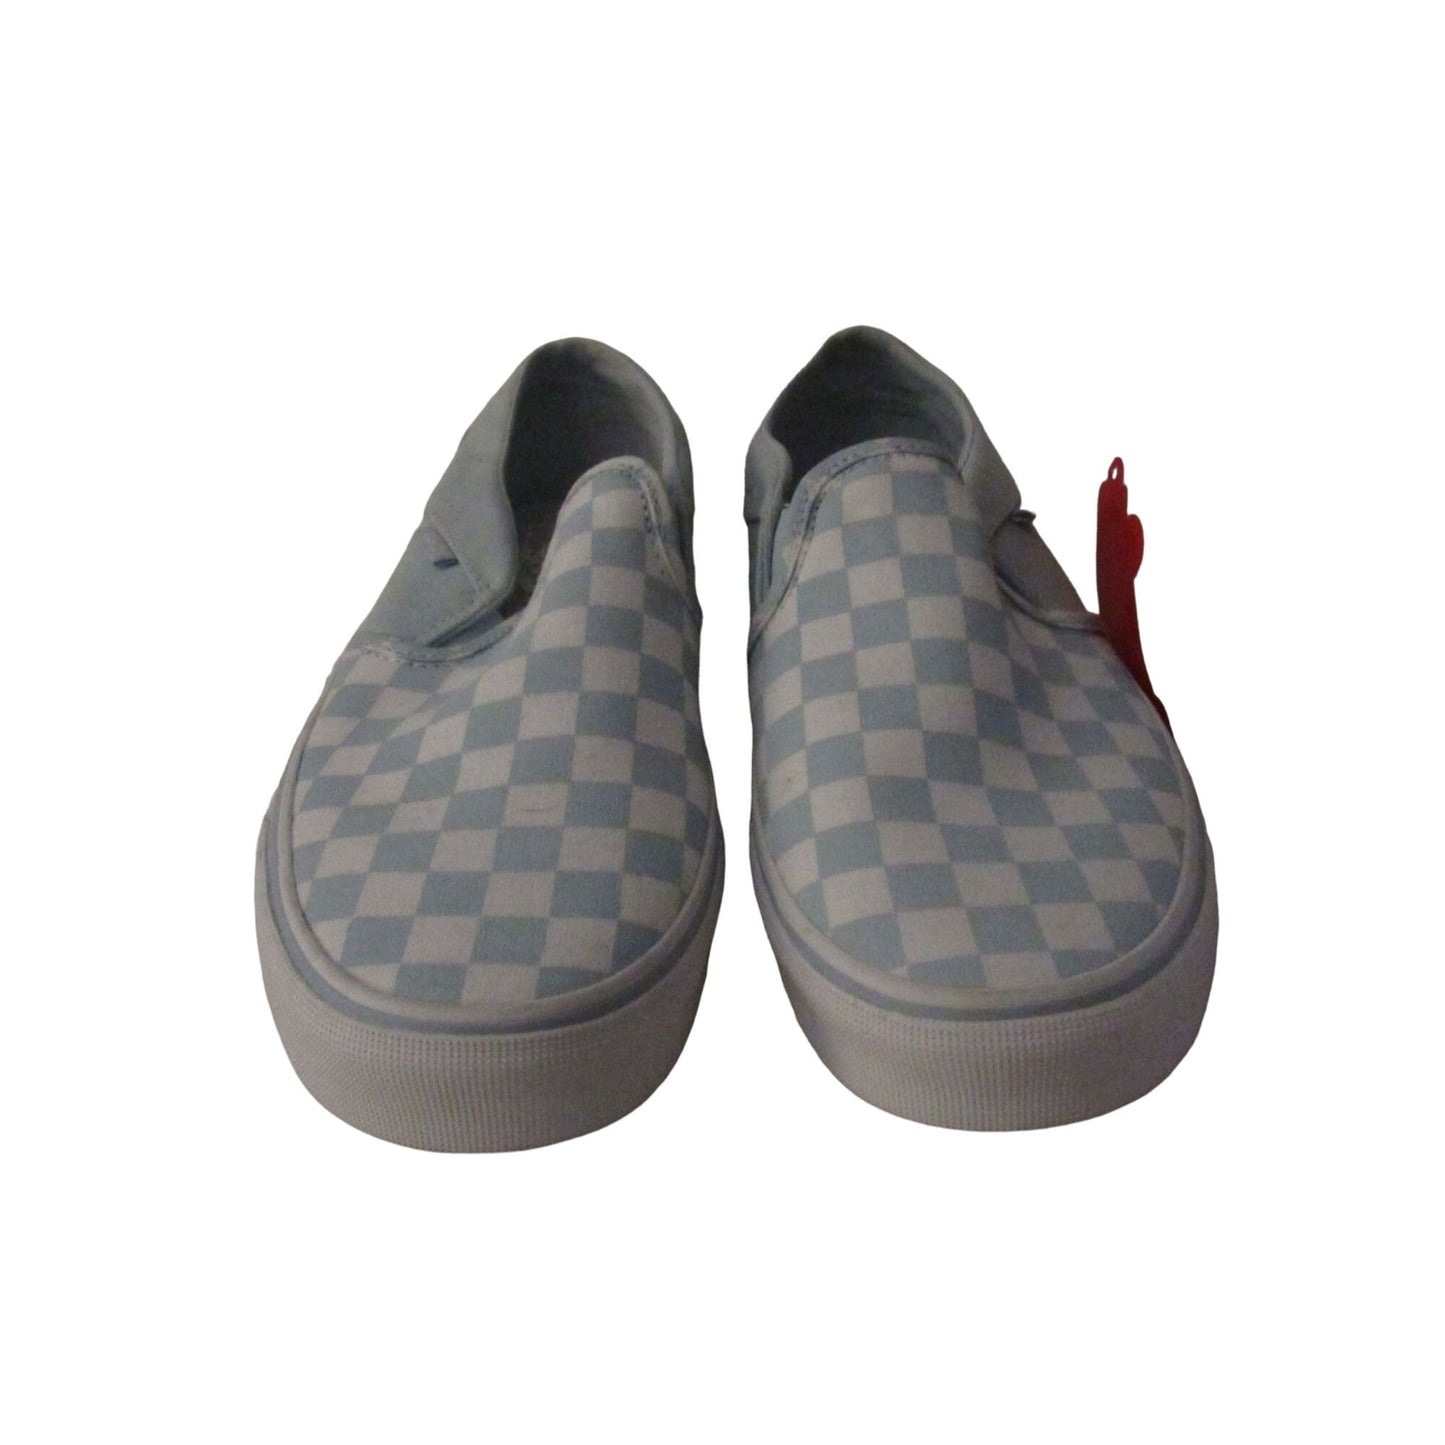 Vans Blue & White Checkerboard Slip-on Shoe Sneakers